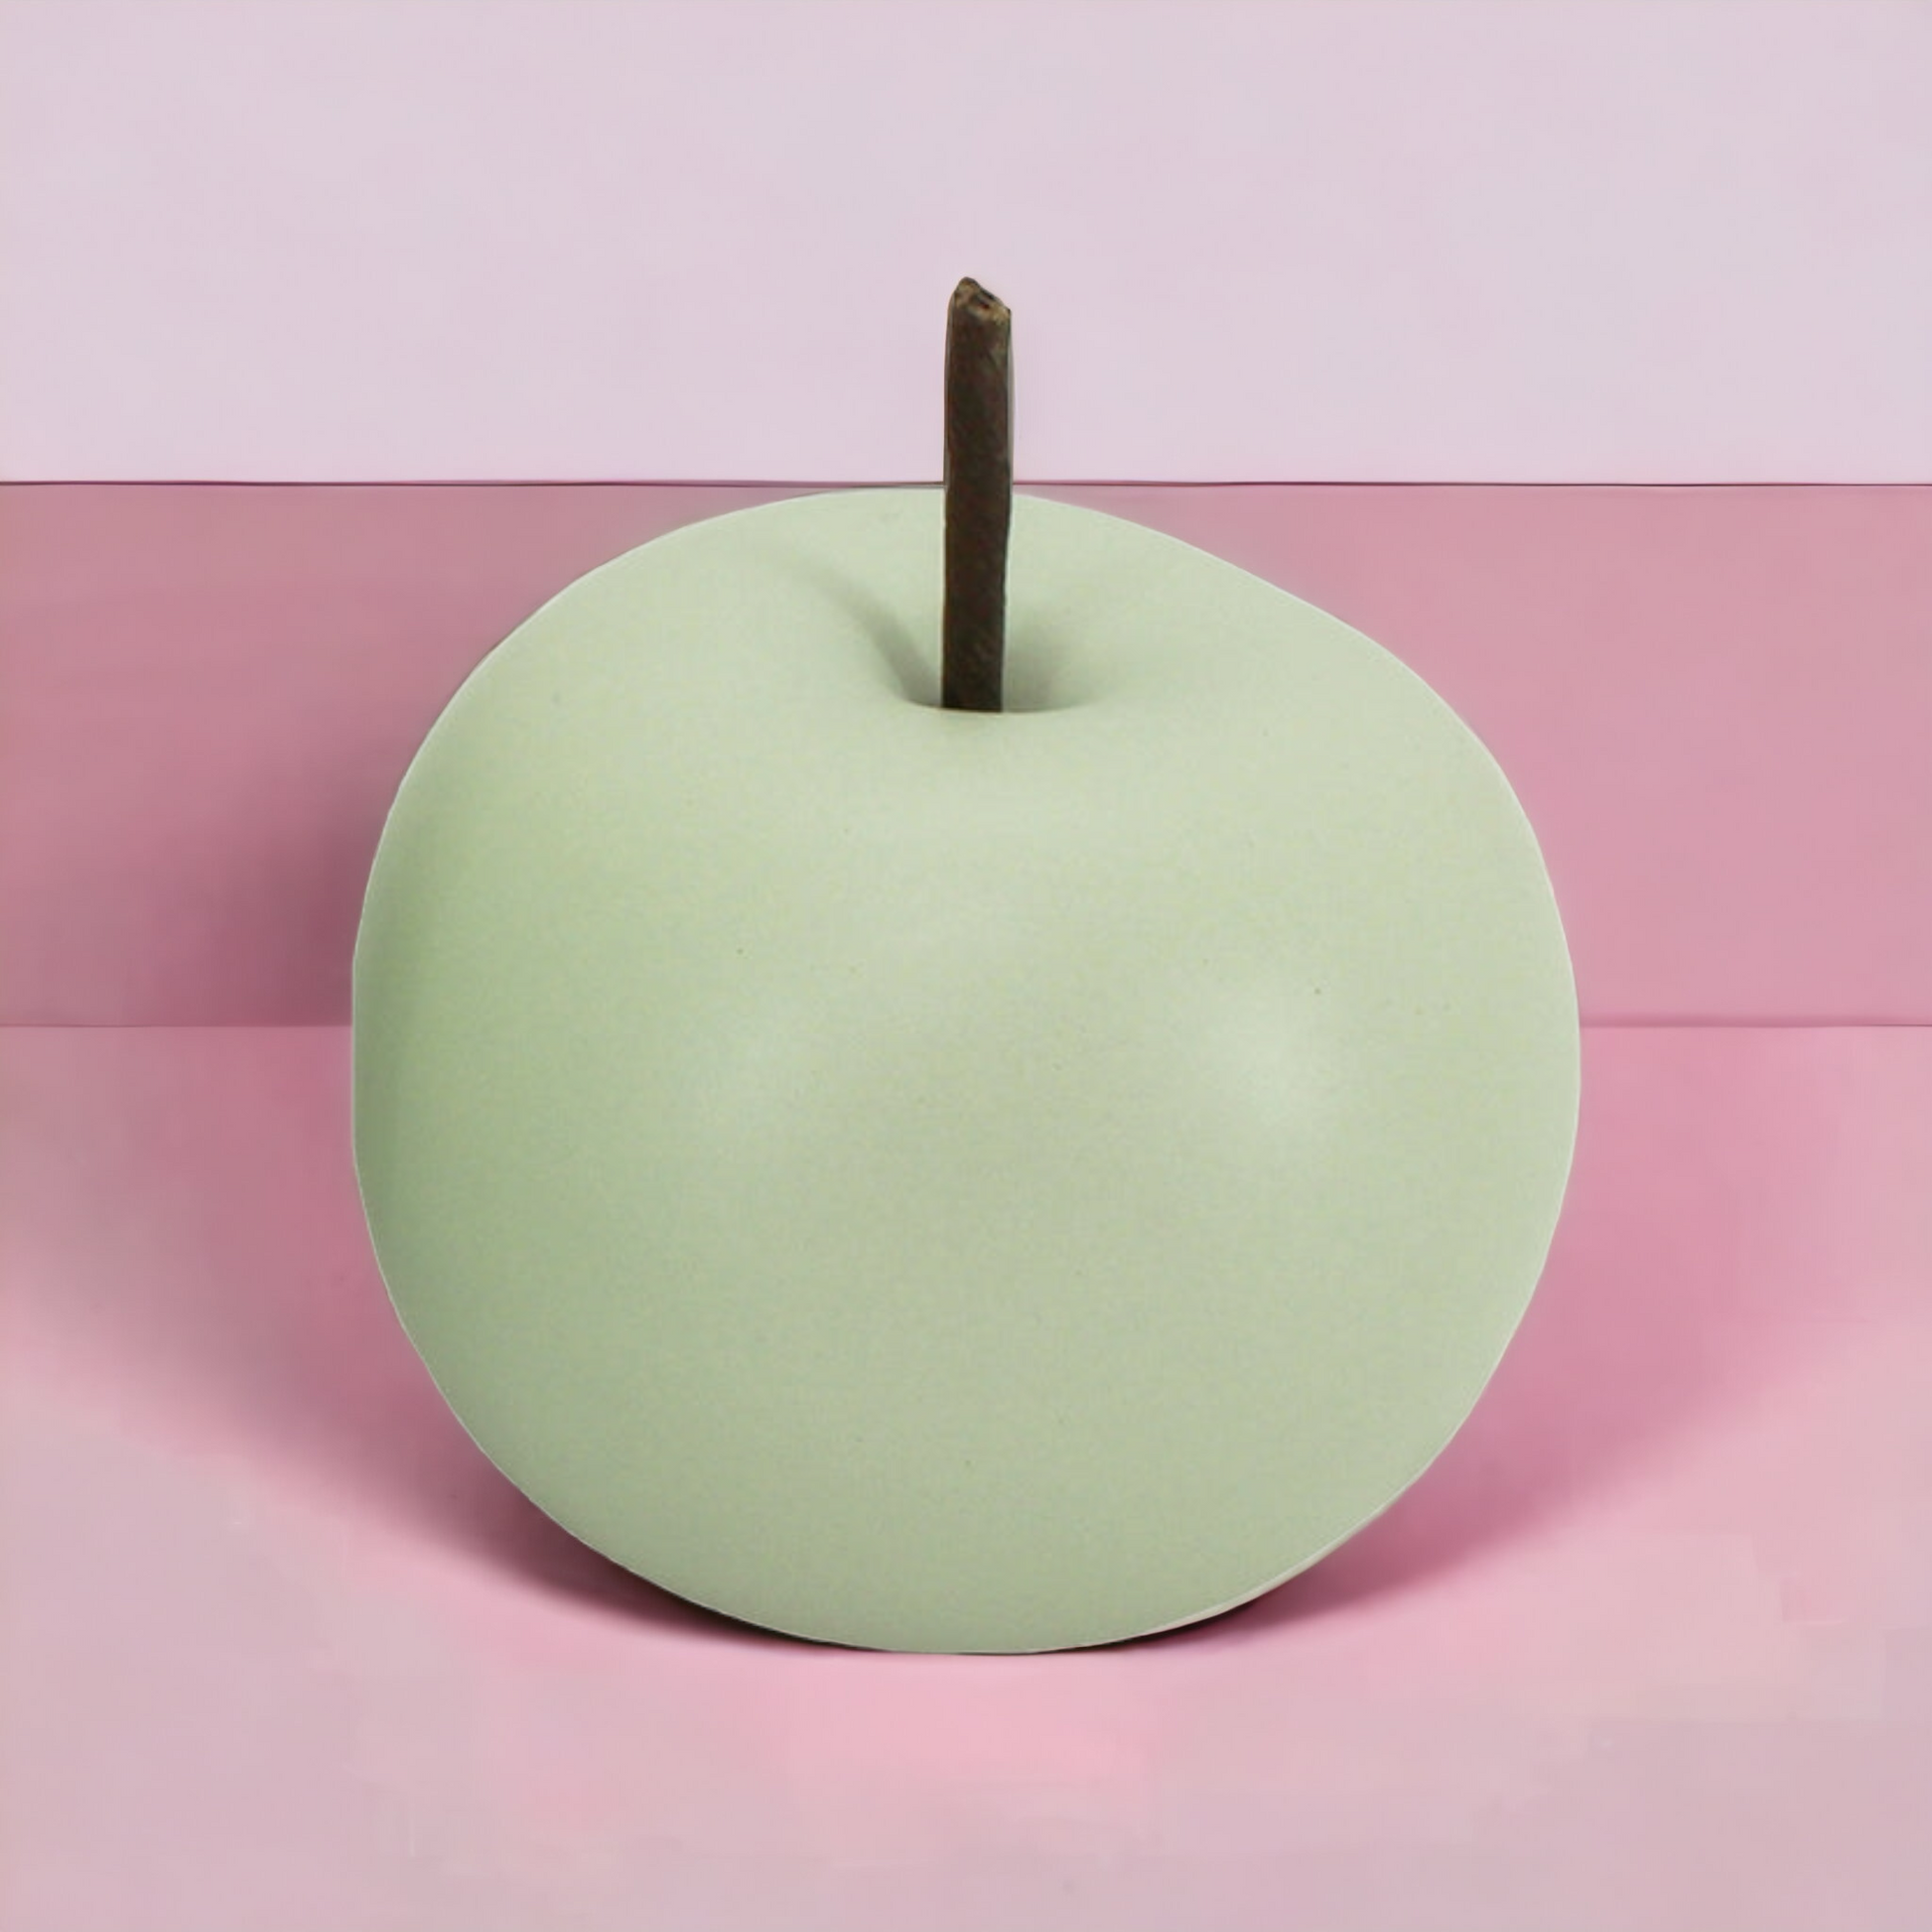 Eden Green Apple (Large)